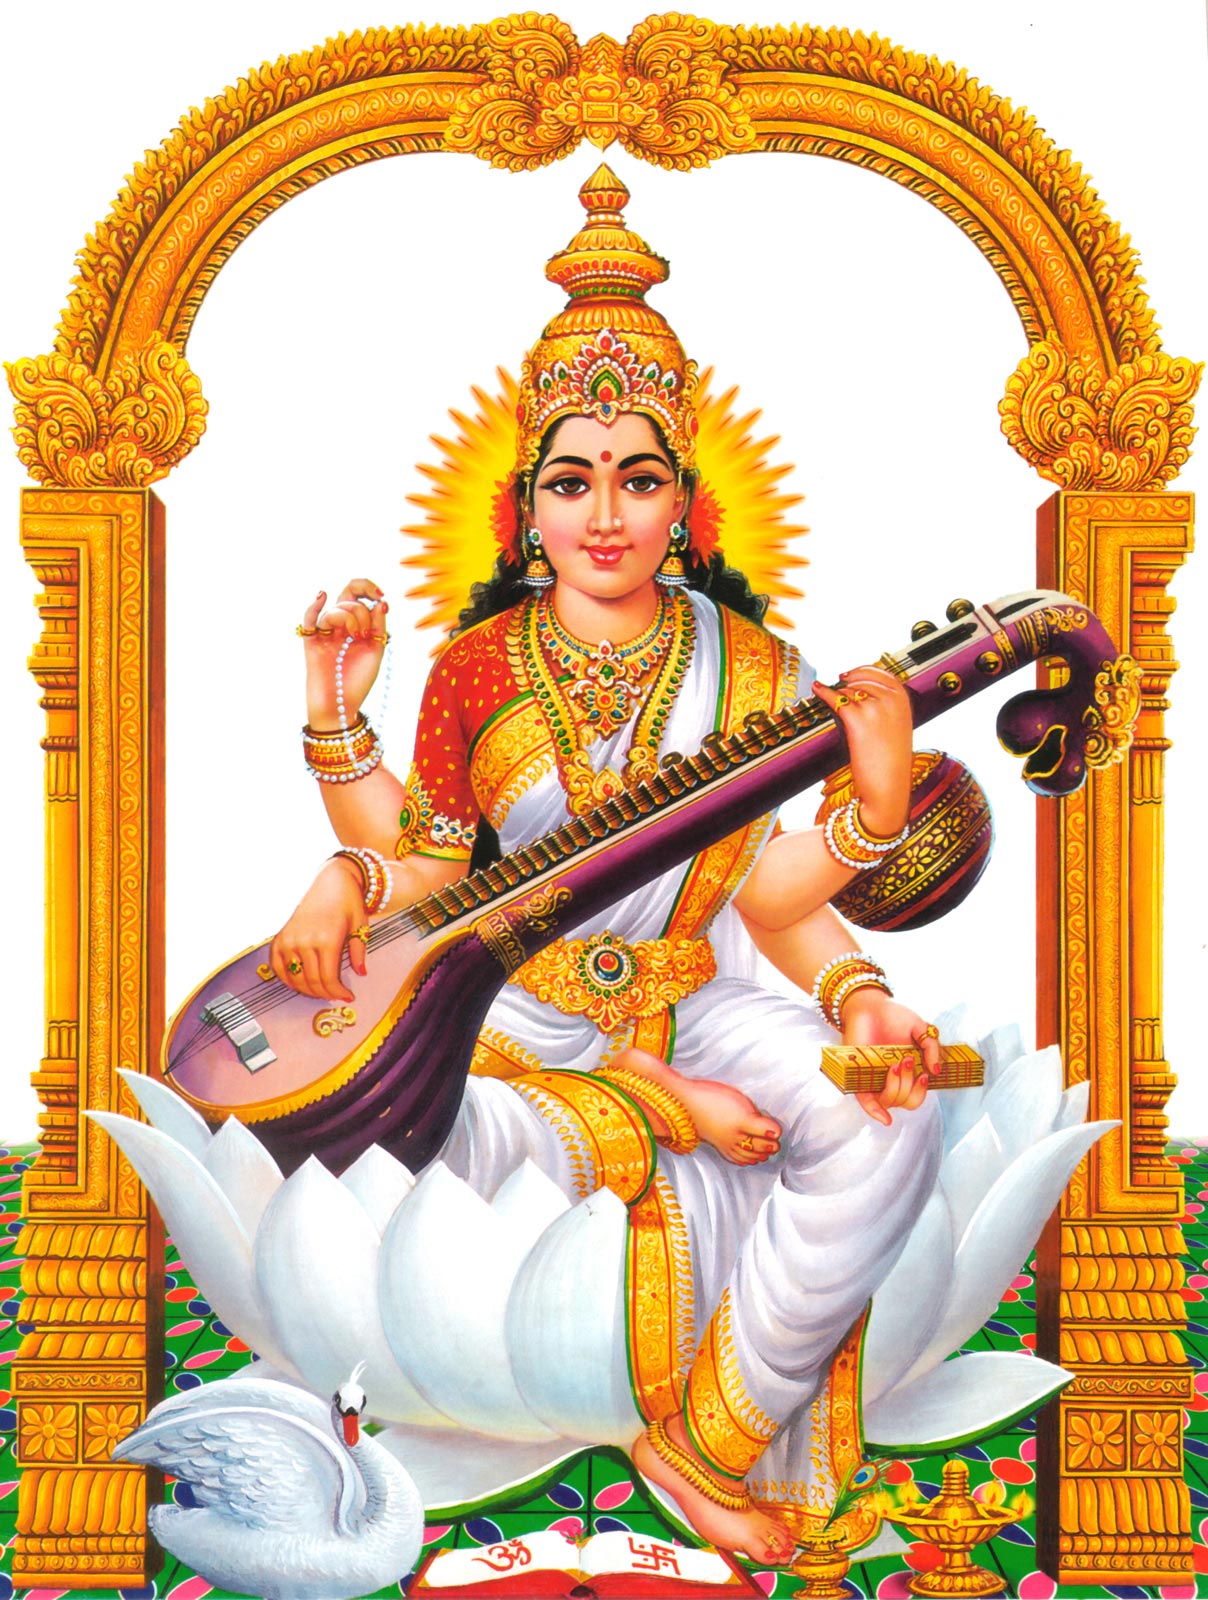 hindu god wallpaper hd 1920x1080,veena,saraswati veena,indian musical instruments,string instrument,plucked string instruments